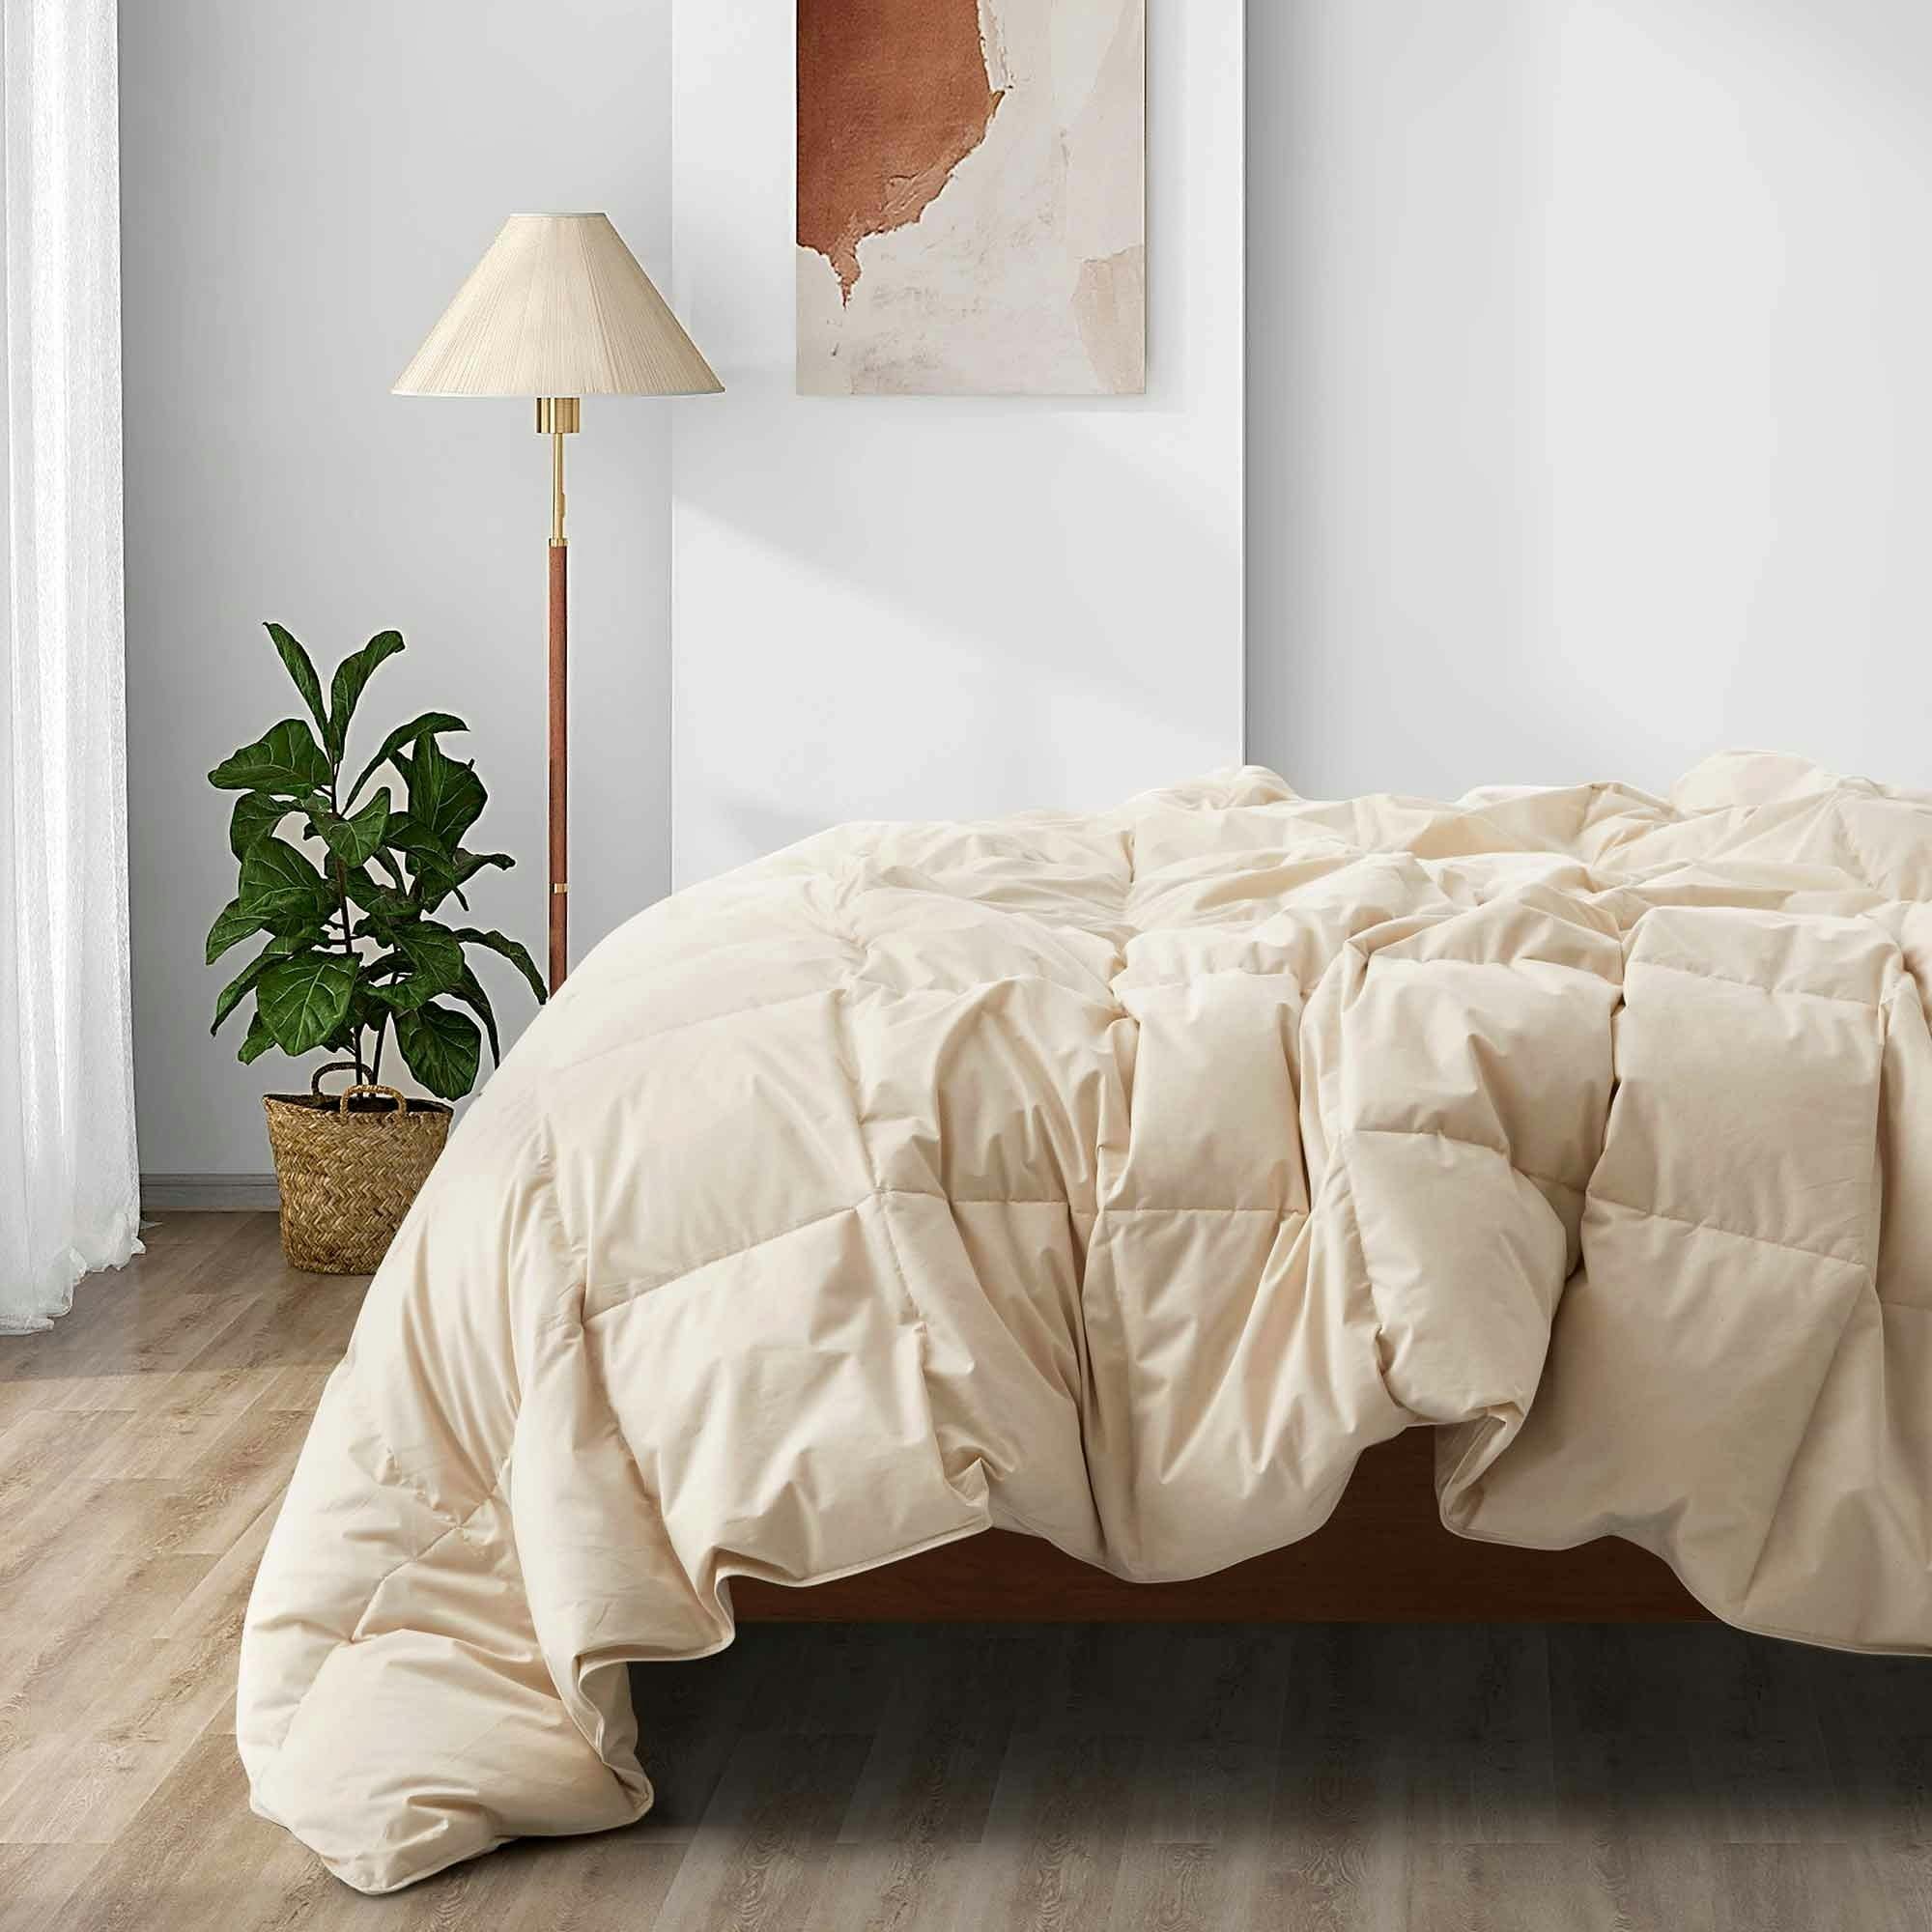 EcoDream Full/Queen Off-White Organic Cotton Down Comforter